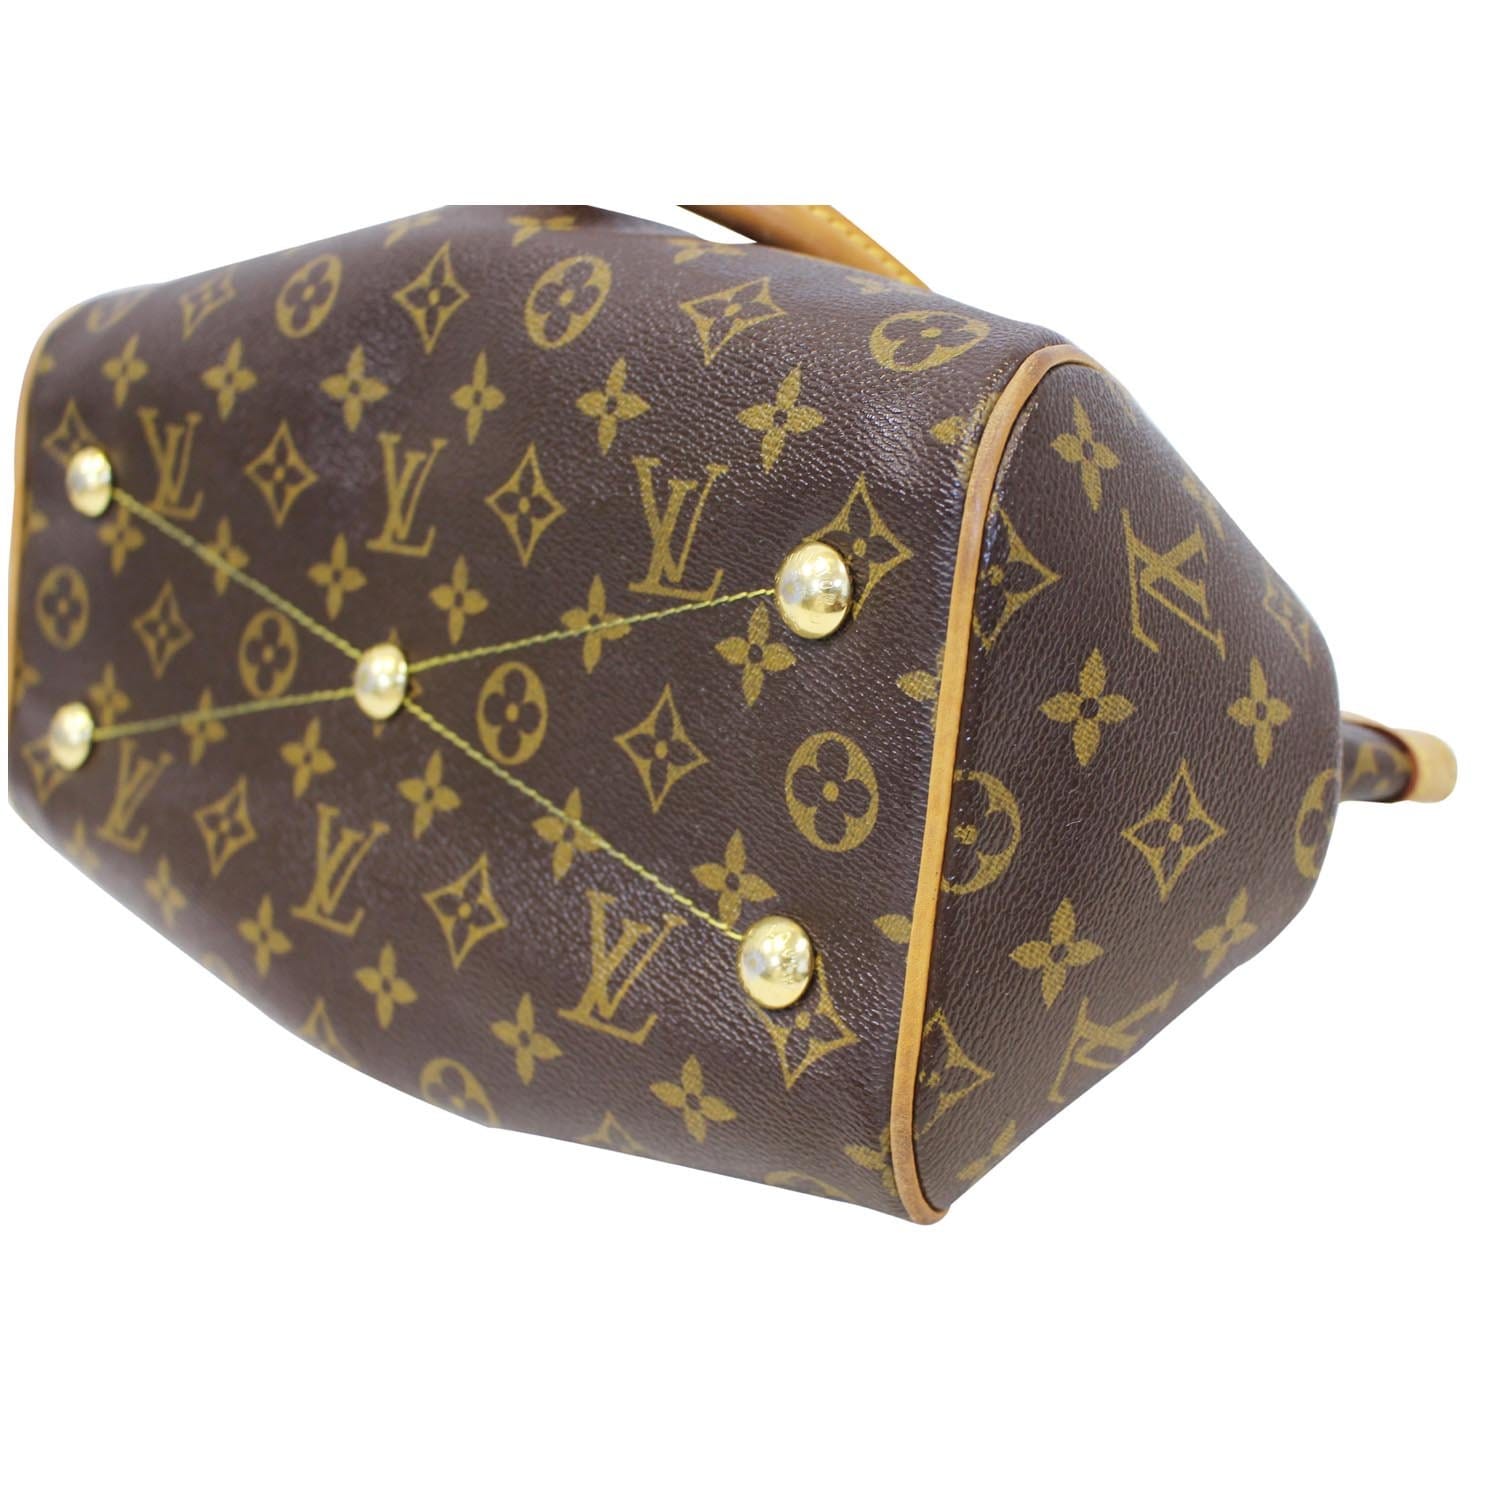 Louis Vuitton 2009 Pre-owned Monogram Tivoli PM Handbag